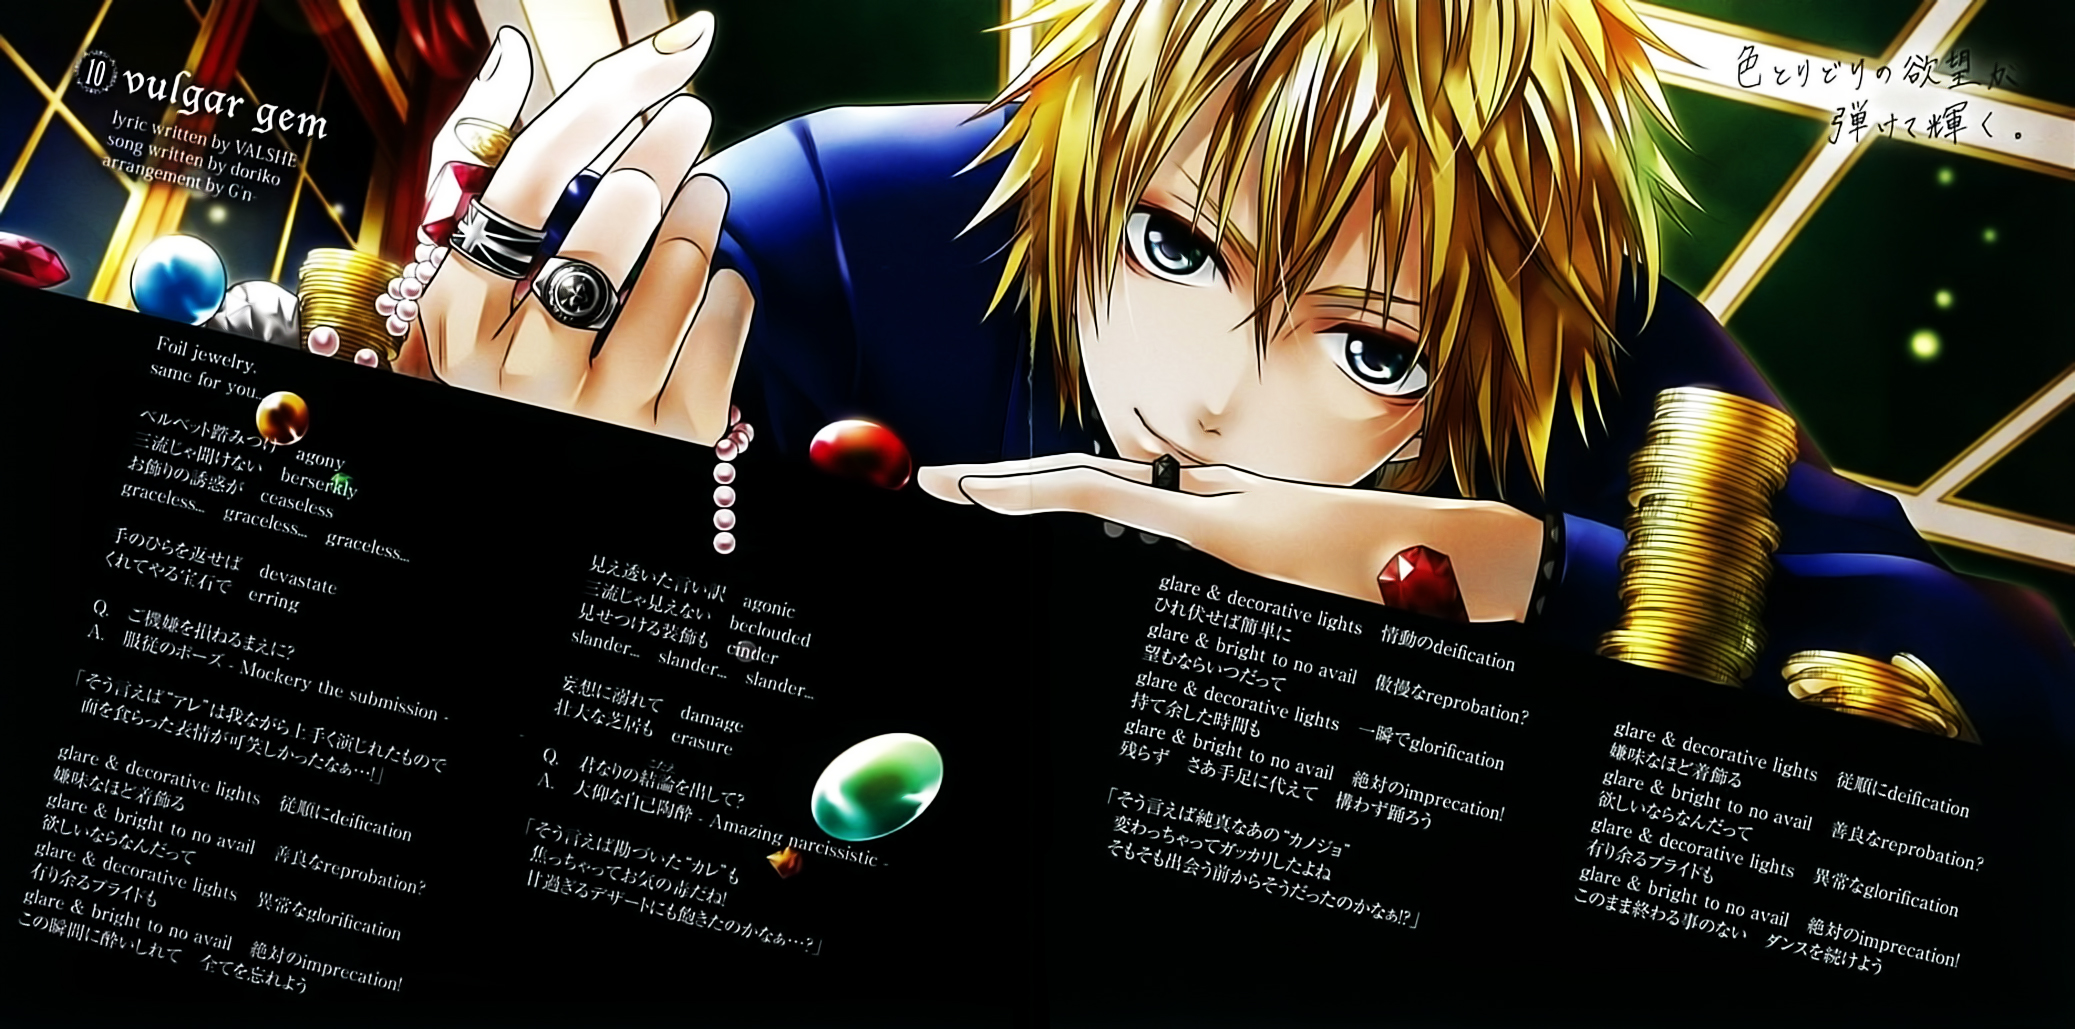 Anime Nico Nico Singer Wallpaper